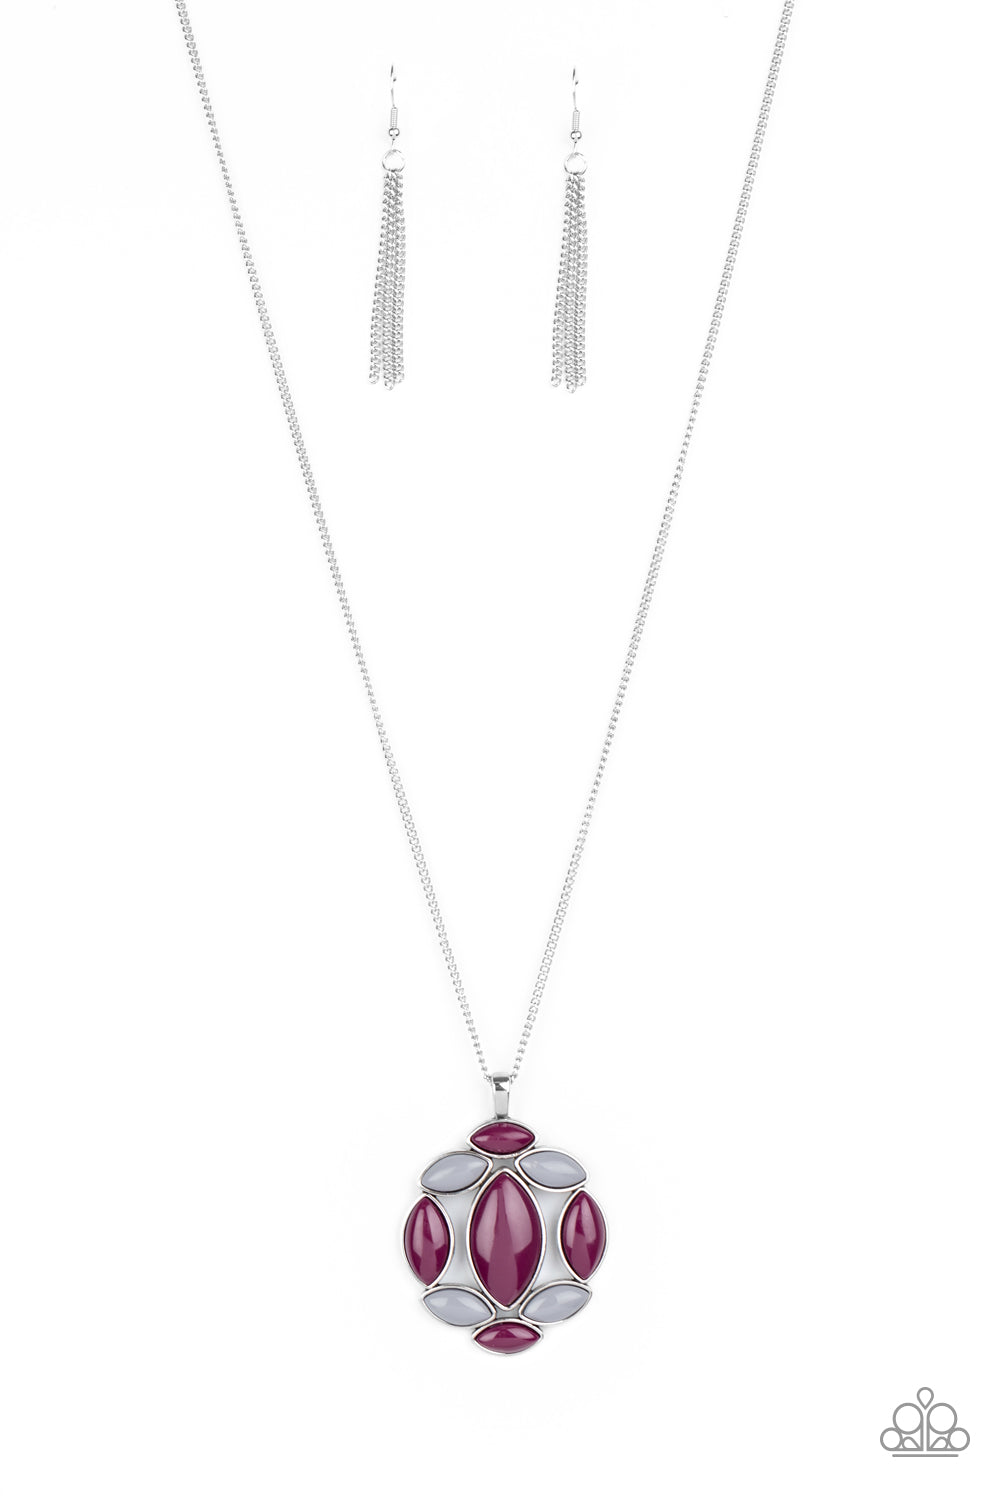 Paparazzi Accessories - Chromatic Cache - Purple Necklace - Alies Bling Bar